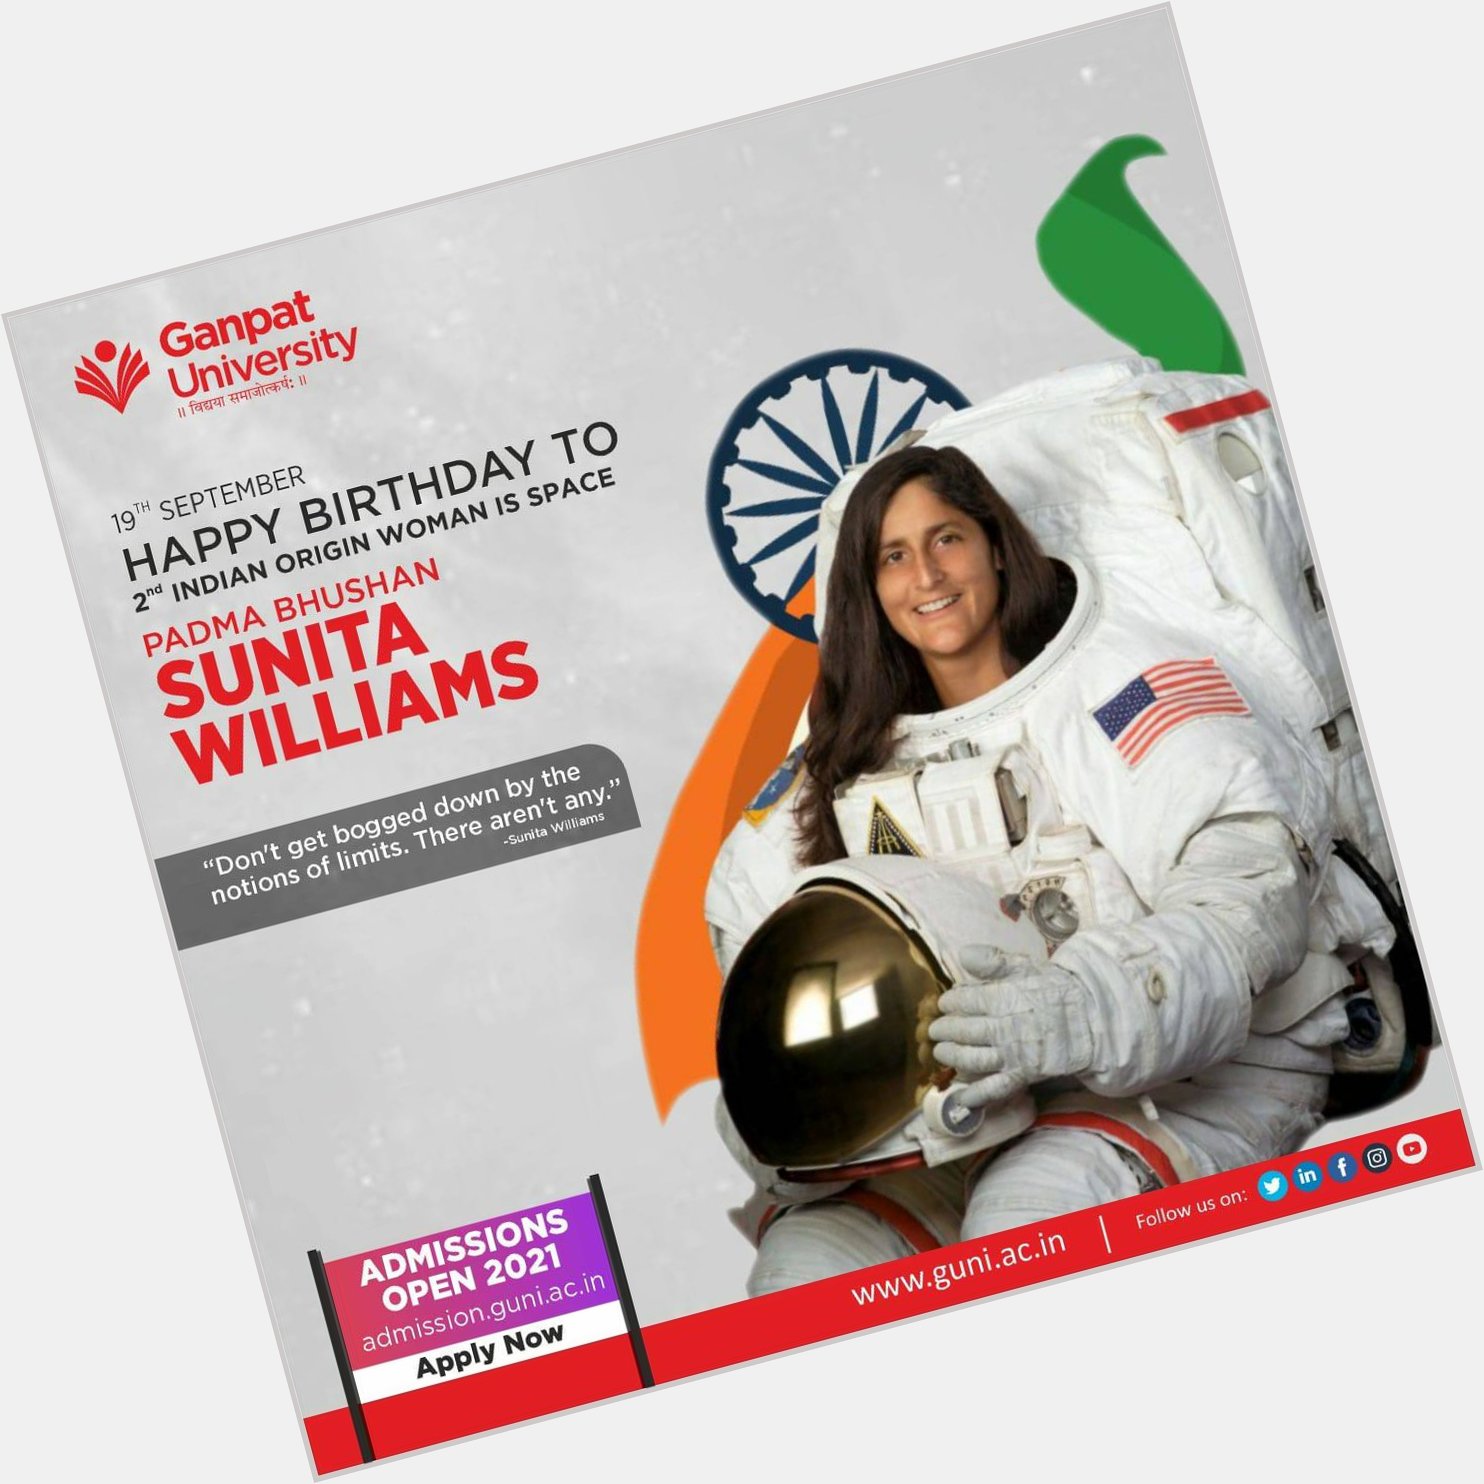 Happy Birthday to NASA Astronaut *Sunita Williams!* 